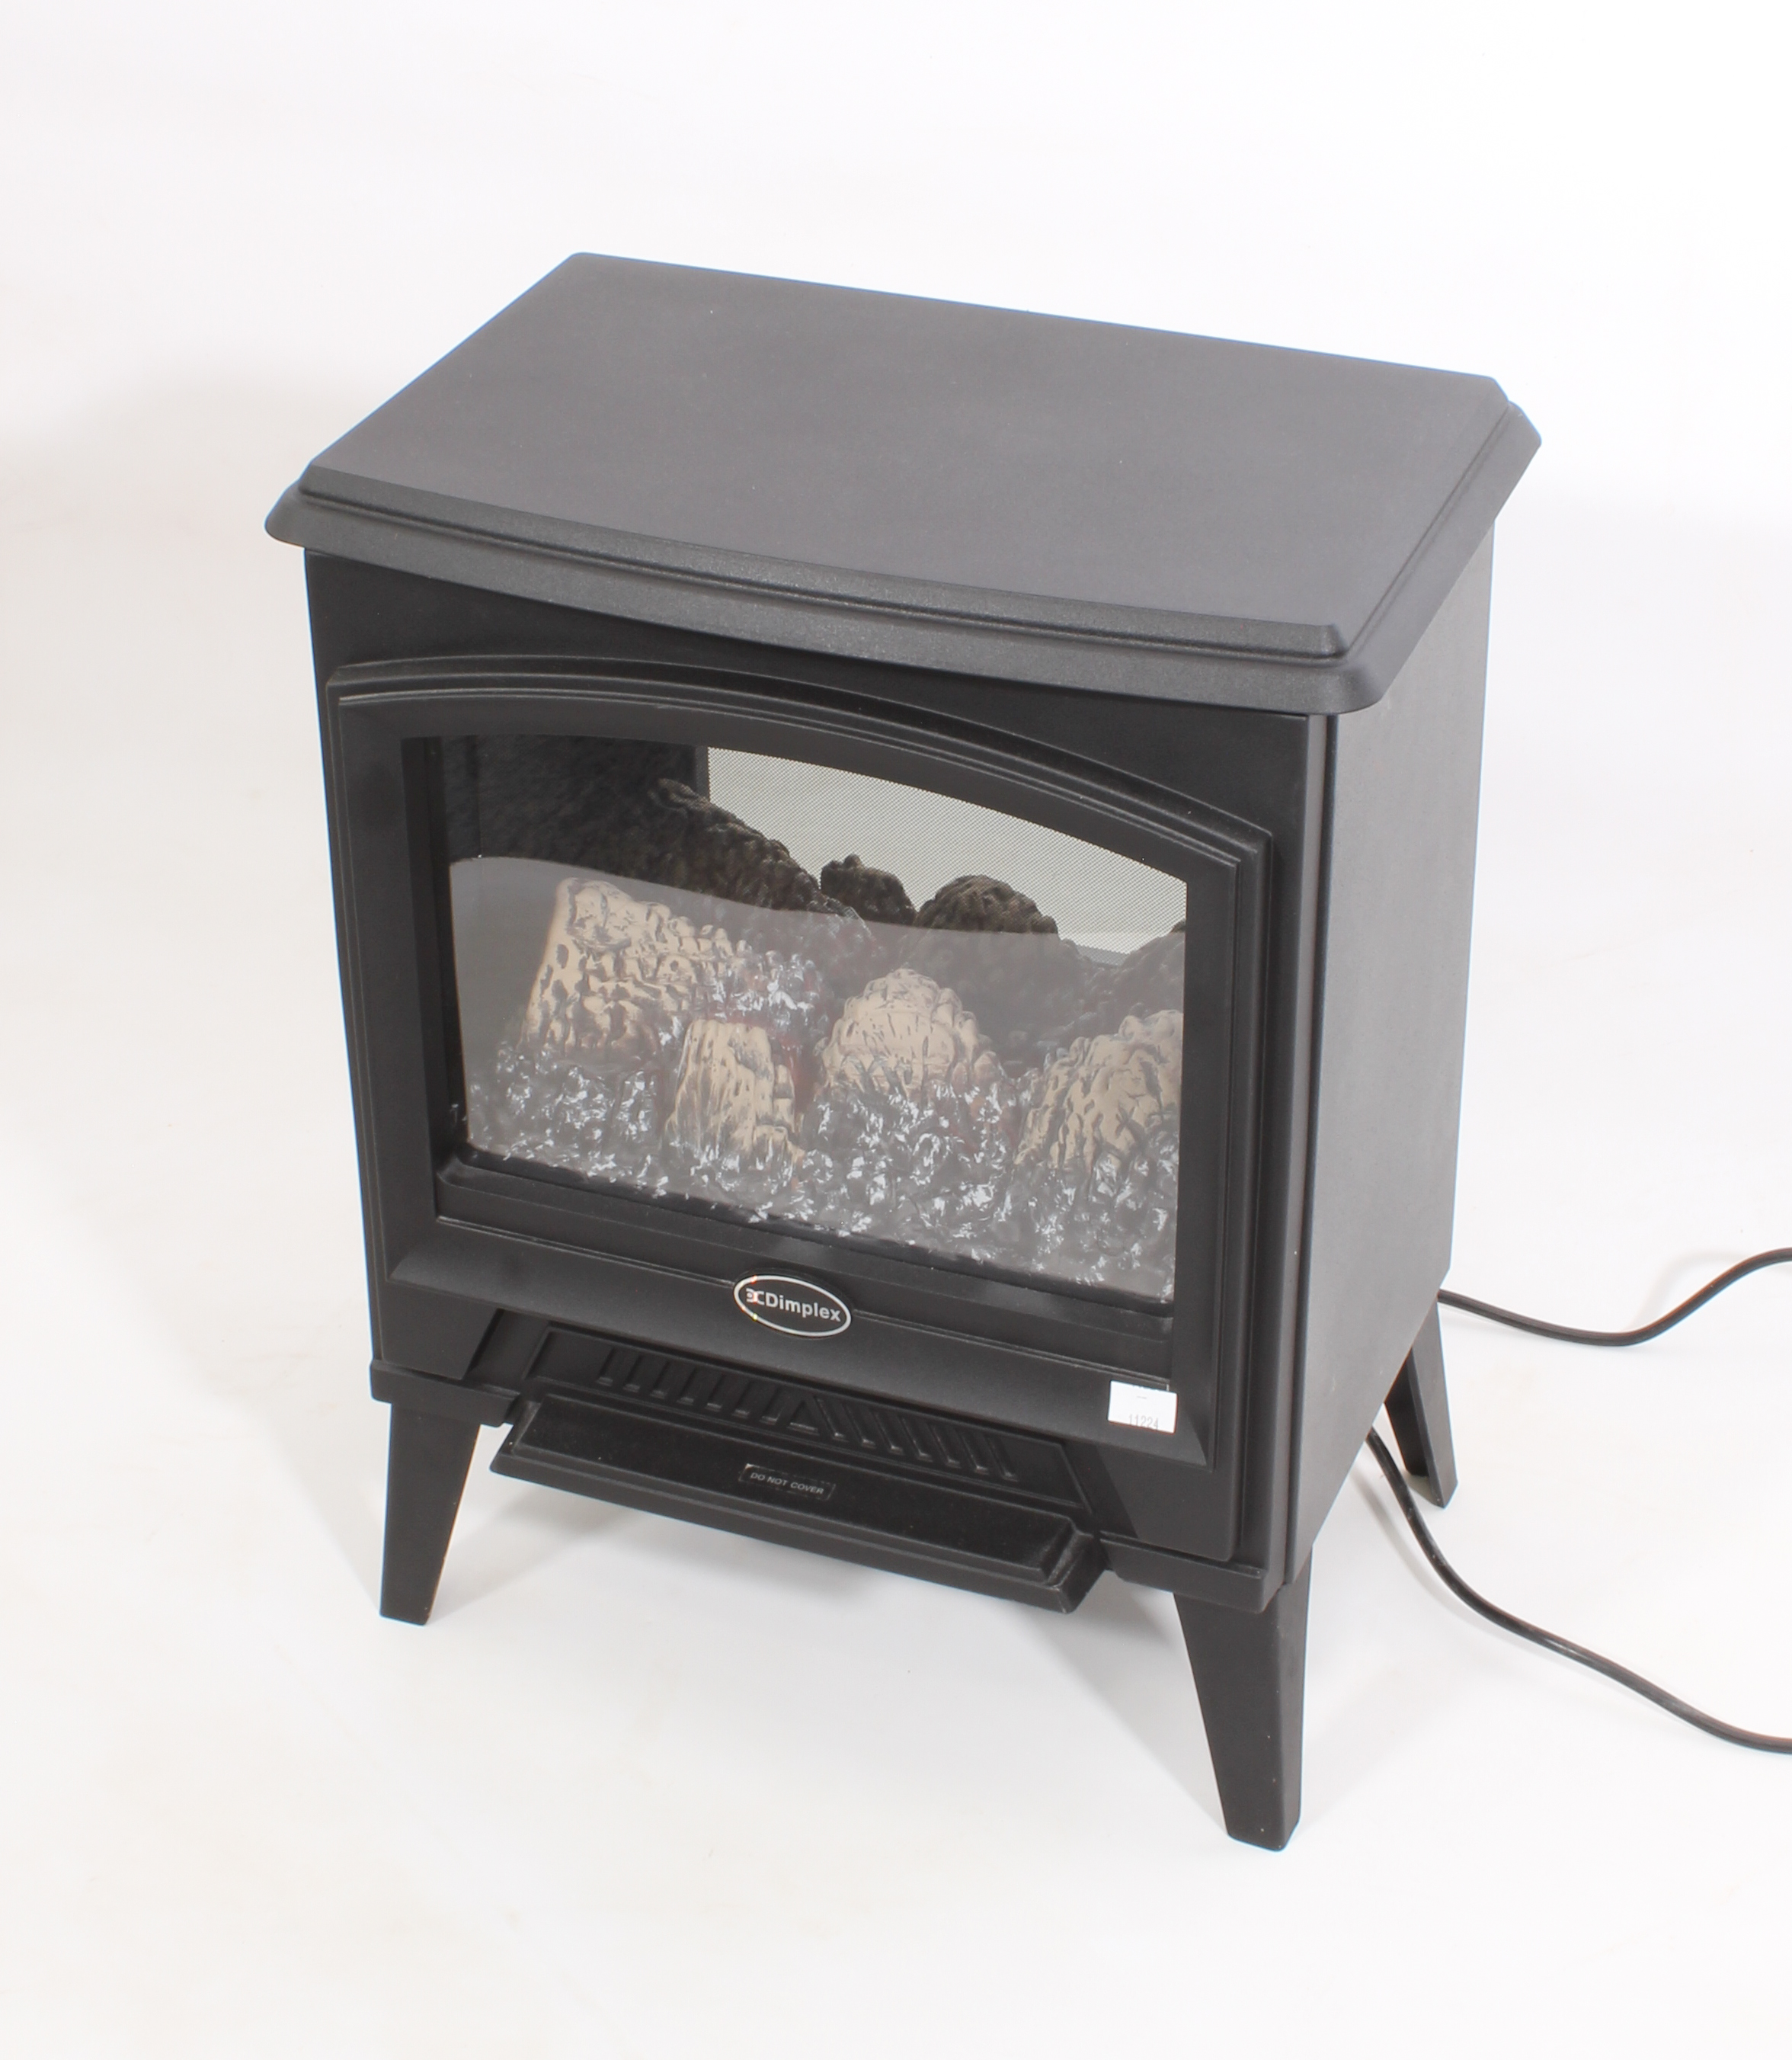 A Dimplex Casper wood-burner-style electric fire - model no. CAS20E, in very good condition.